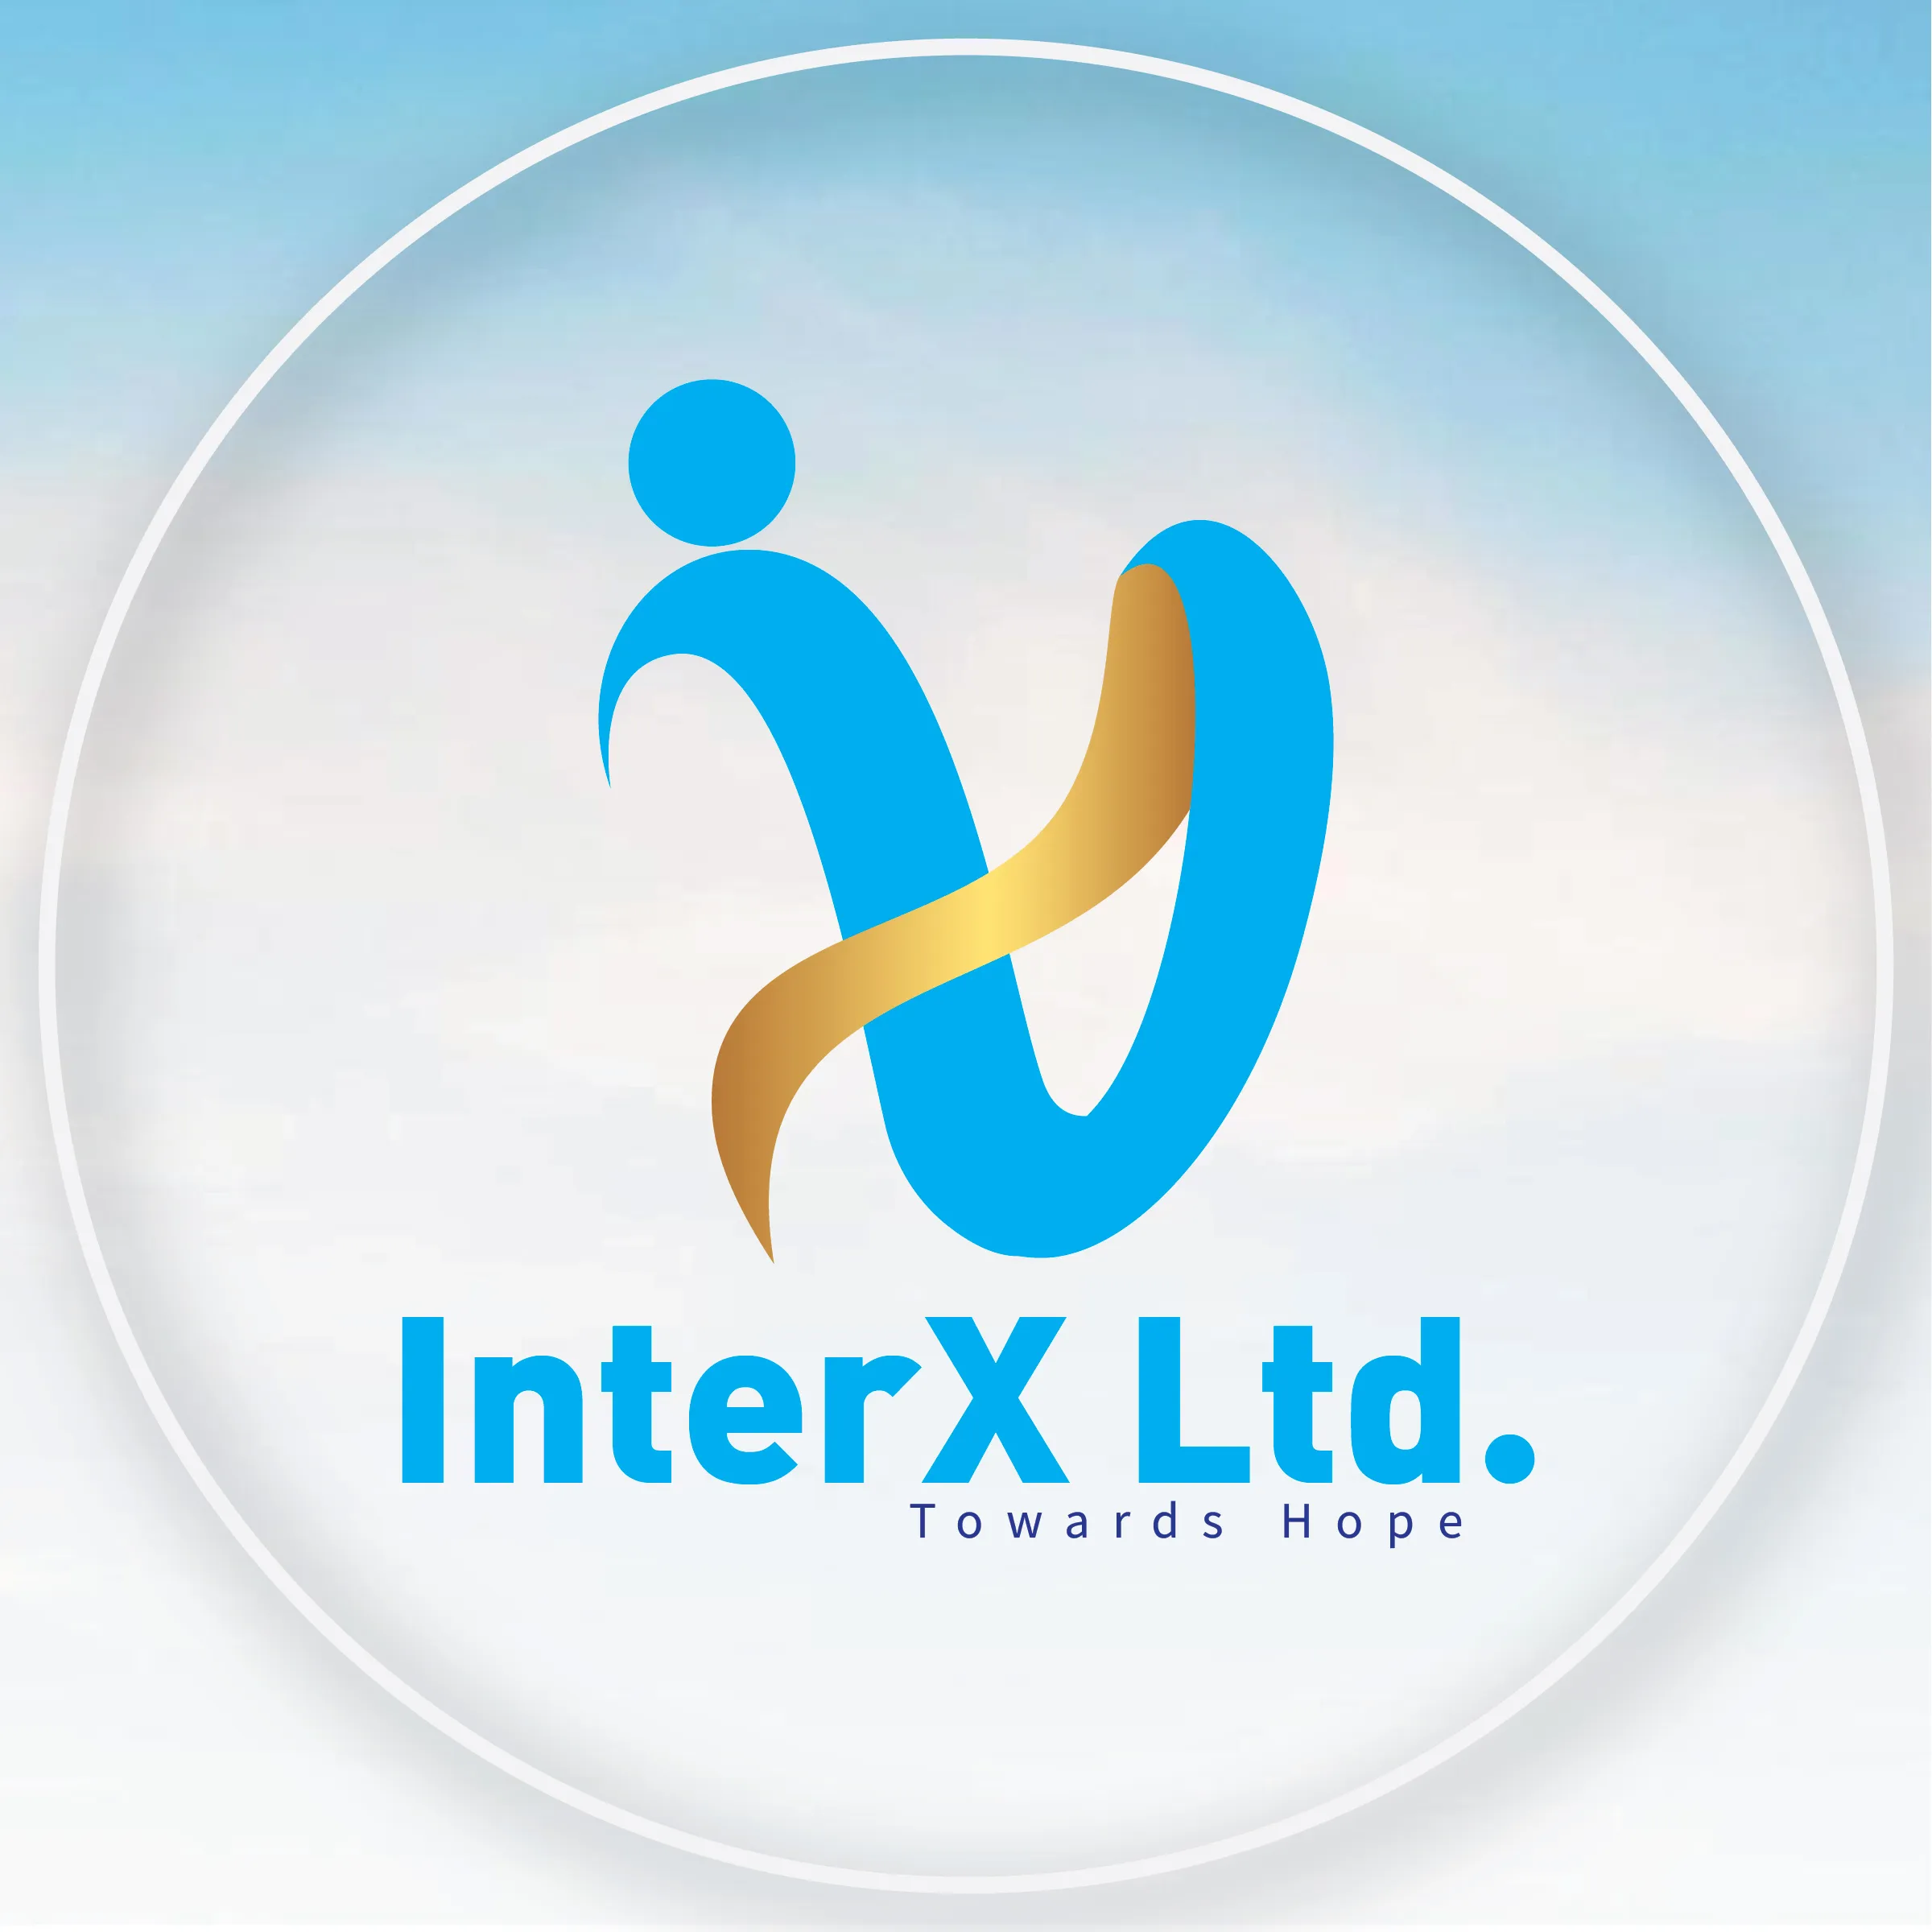 Social PP InterX Ltd-01-01